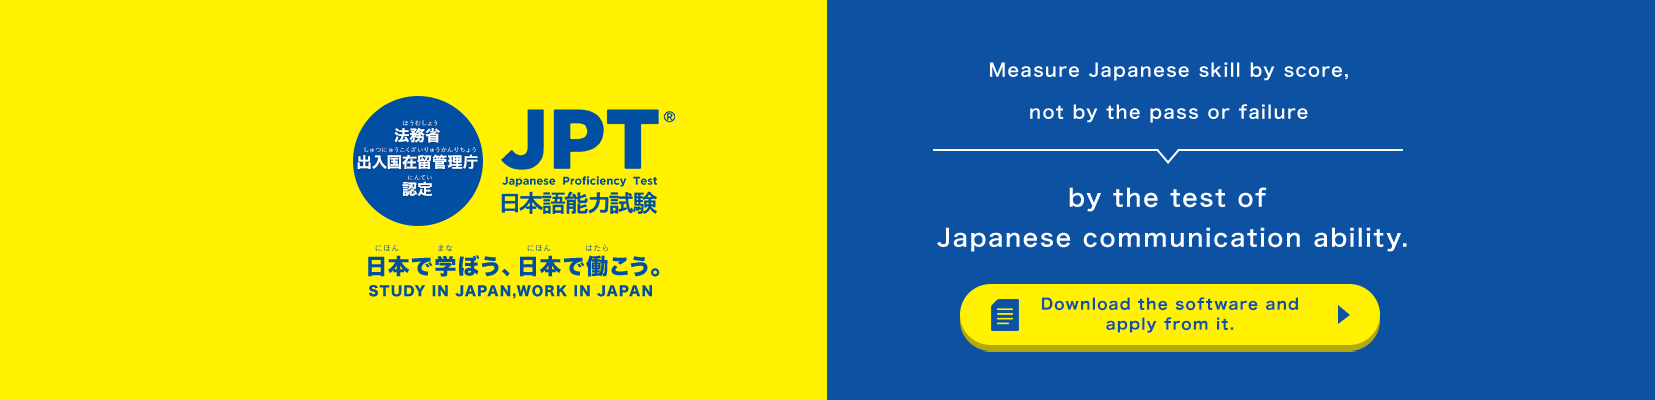 JPT（Japanese Proficiency Test）